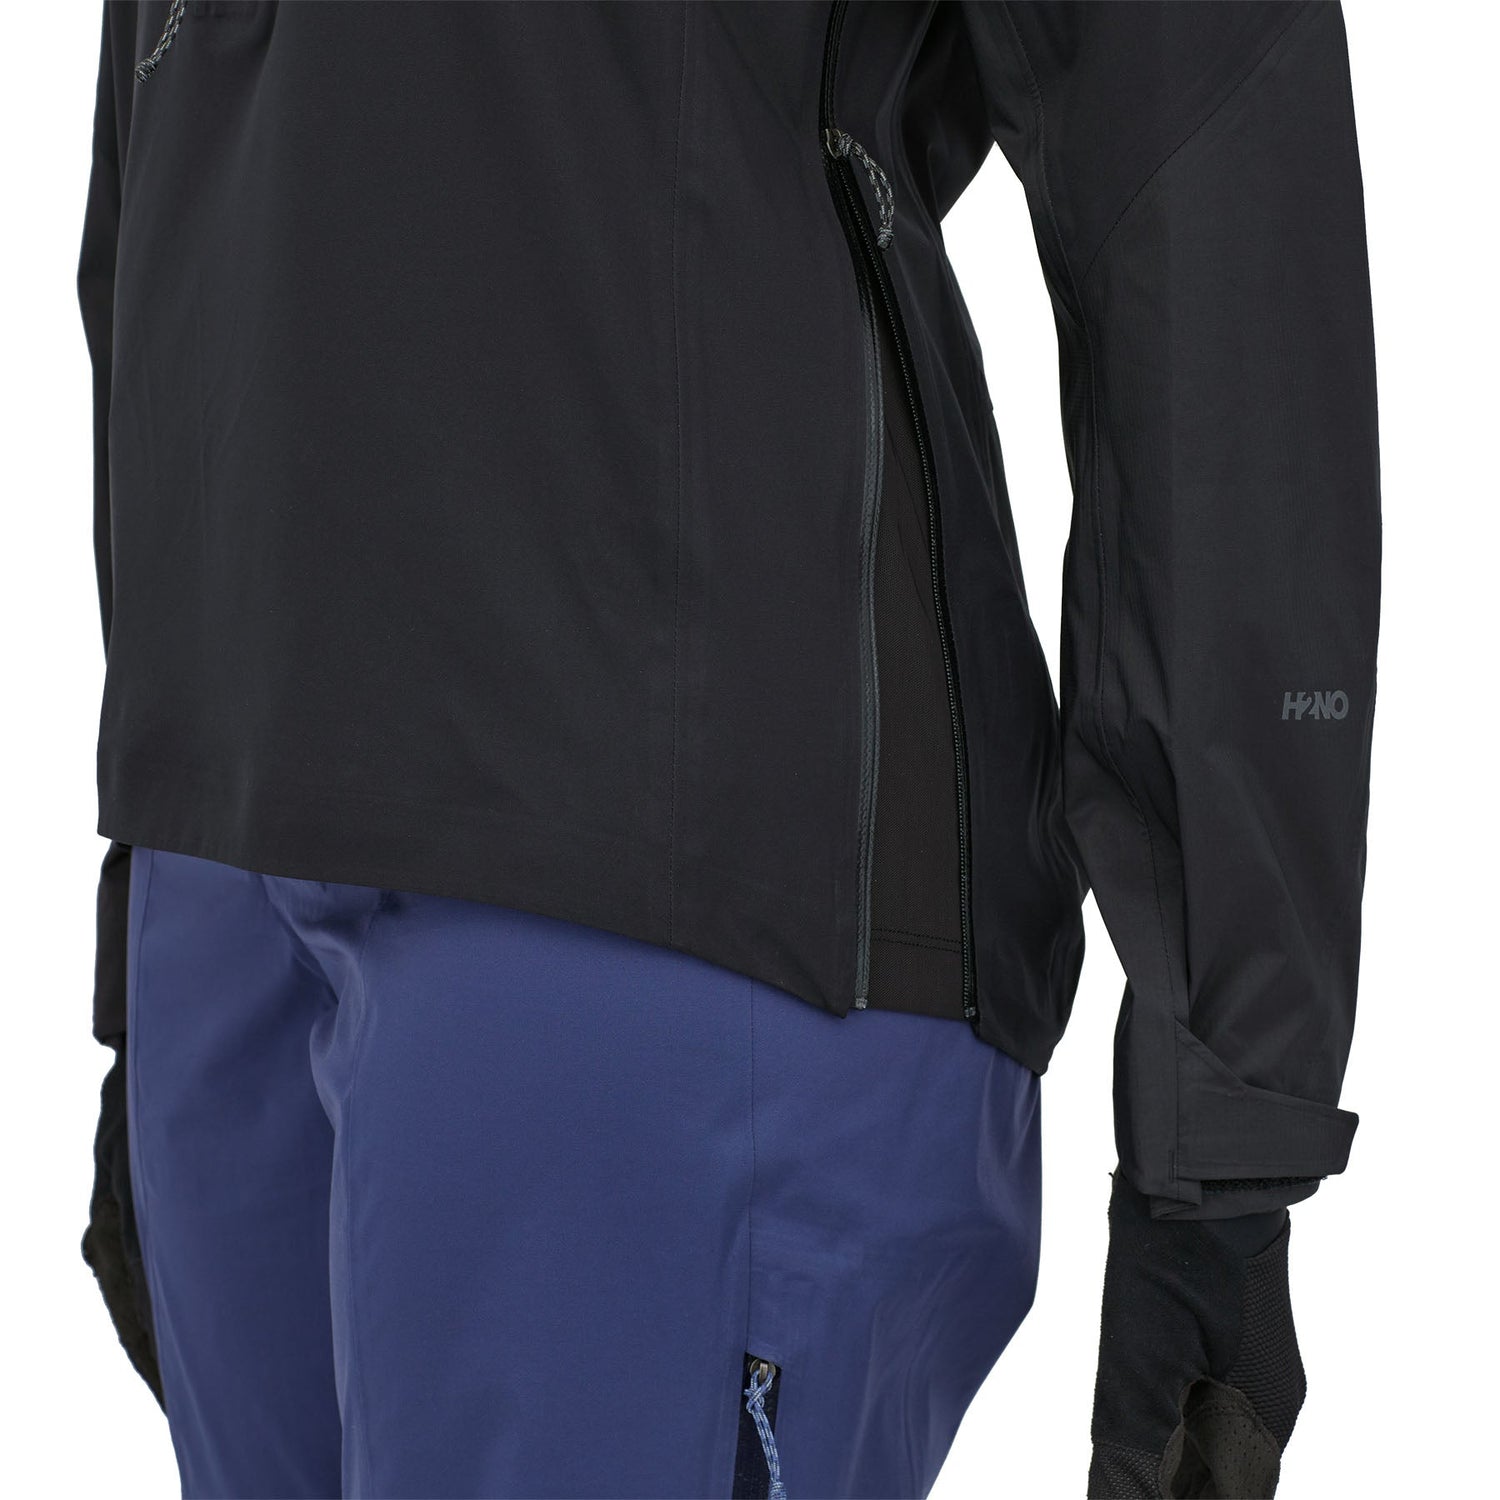 Patagonia - W's Dirt Roamer Storm Bike Jacket - 100% Recycled Nylon - Weekendbee - sustainable sportswear